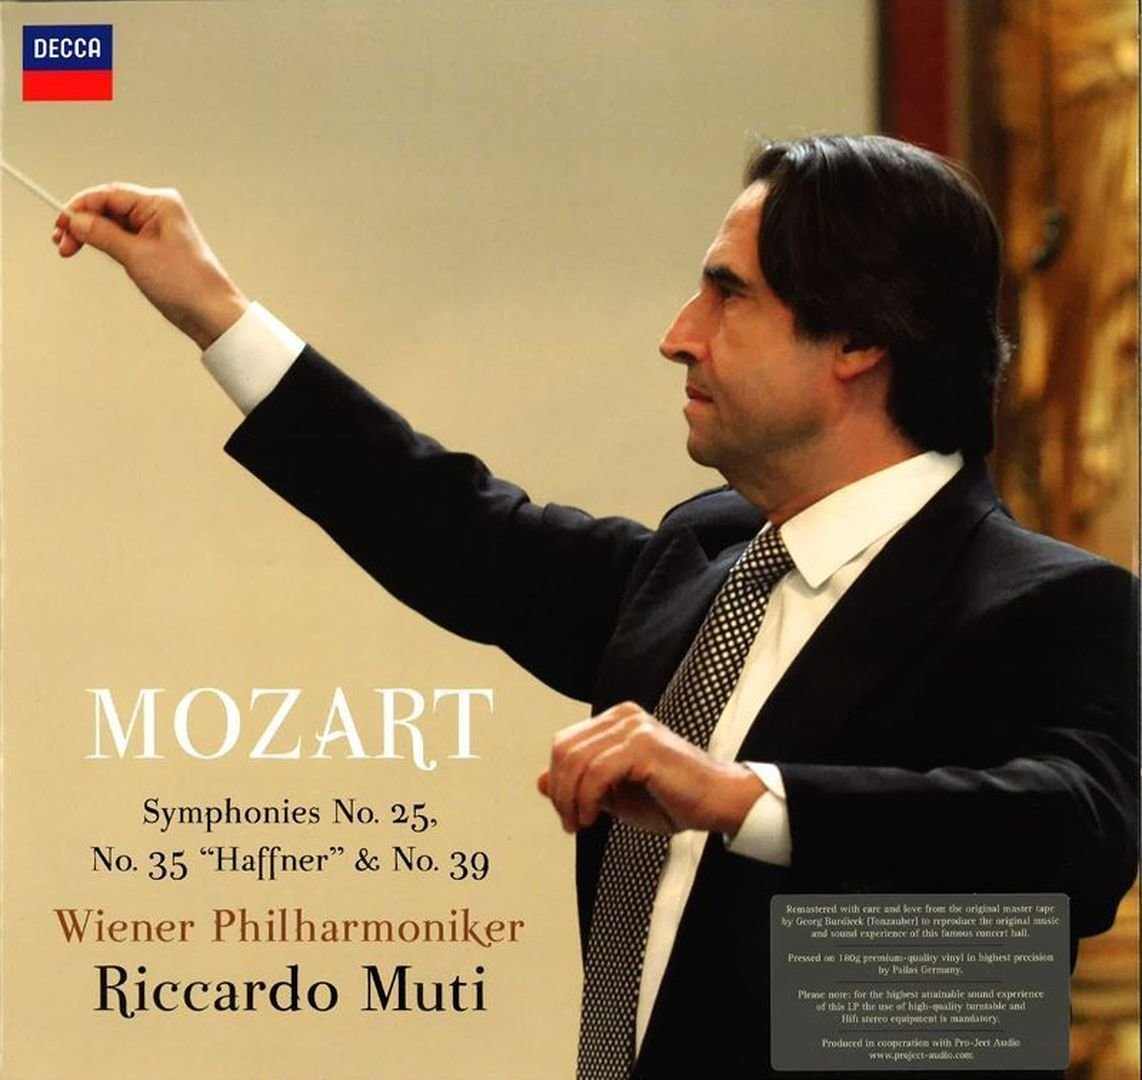 Vinylskiva Riccardo Muti Mozart Symphonies Nr. 25, 35, 39 (2 LP)